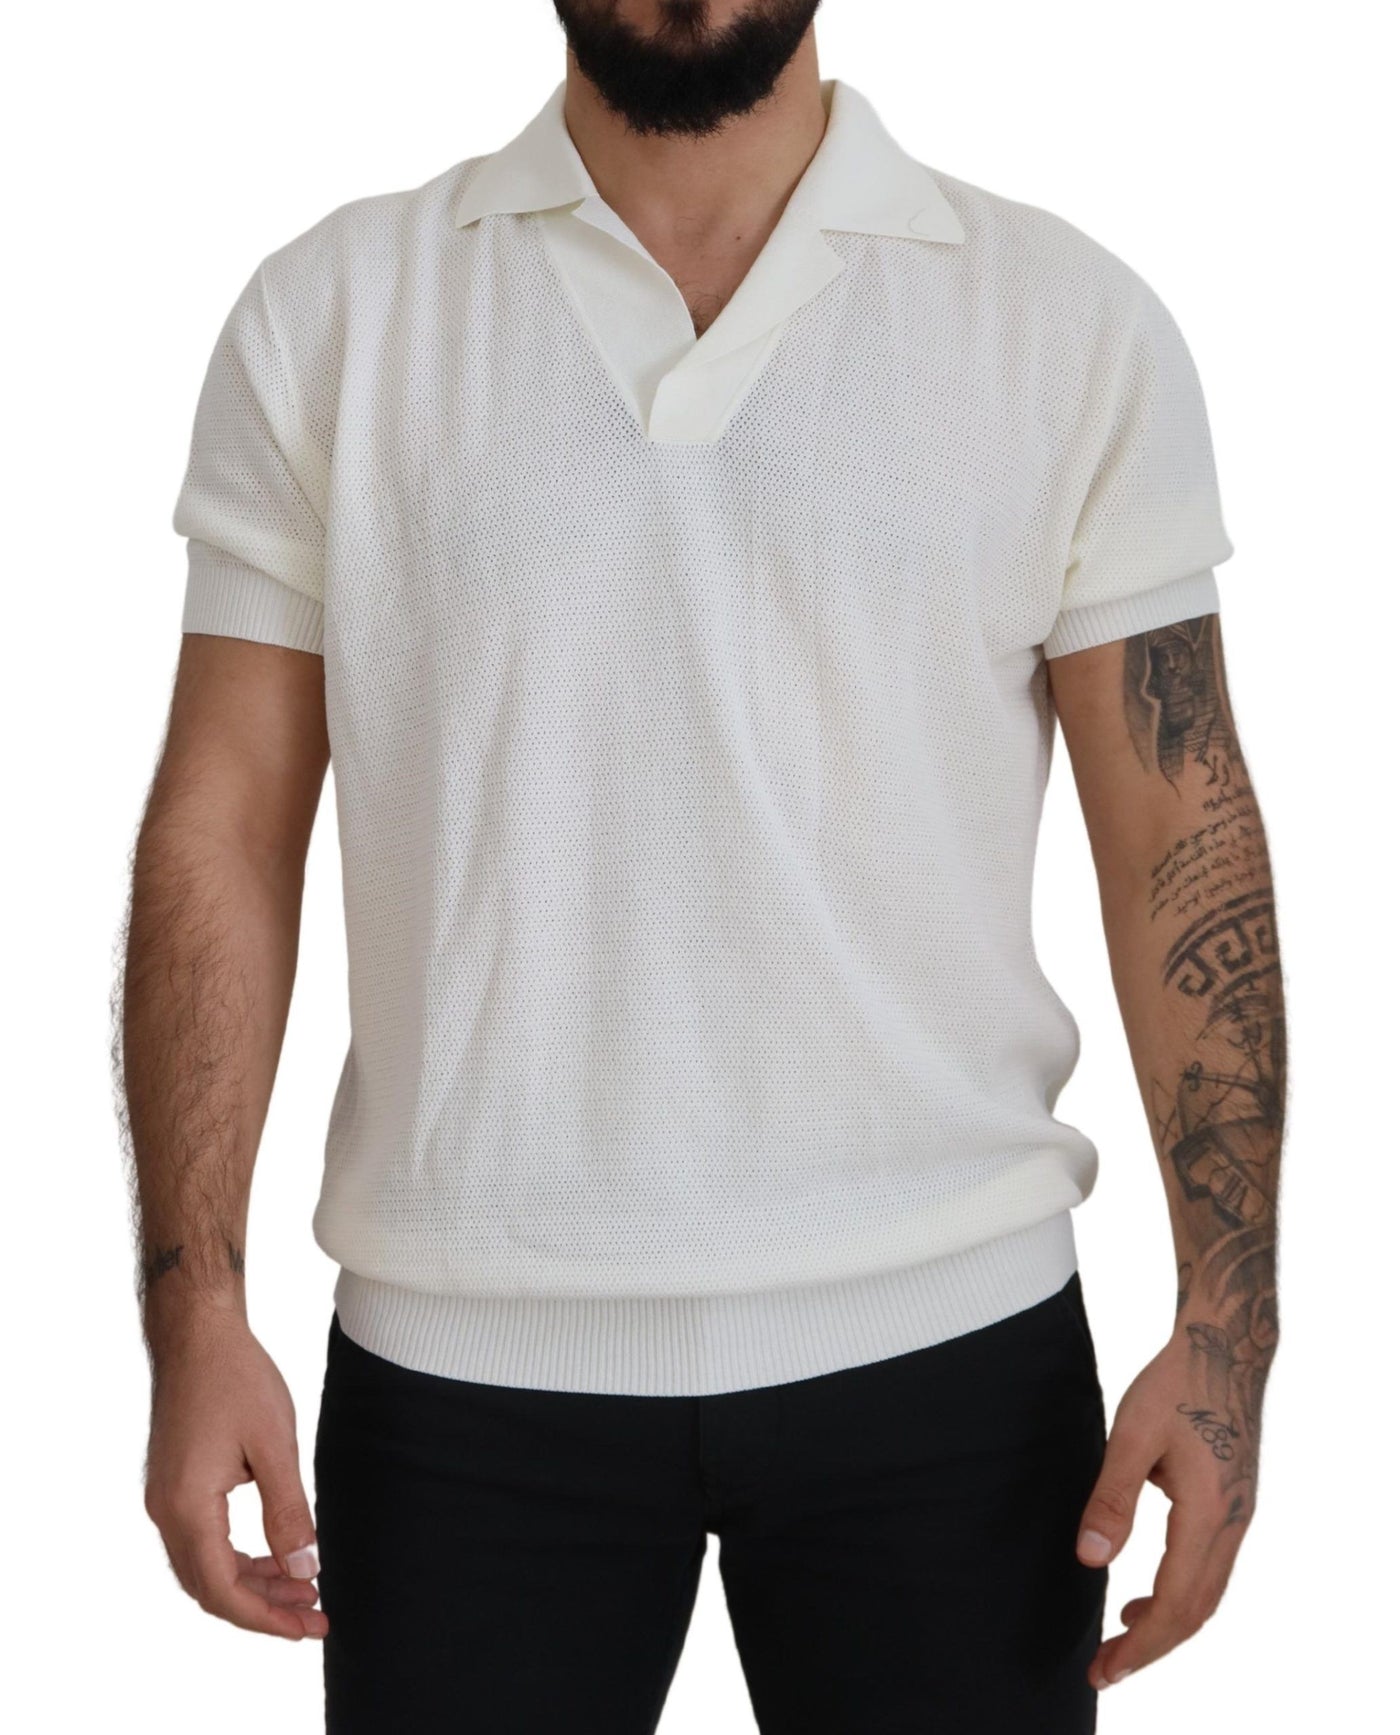 White Collared Polo Cotton T-shirt Henley